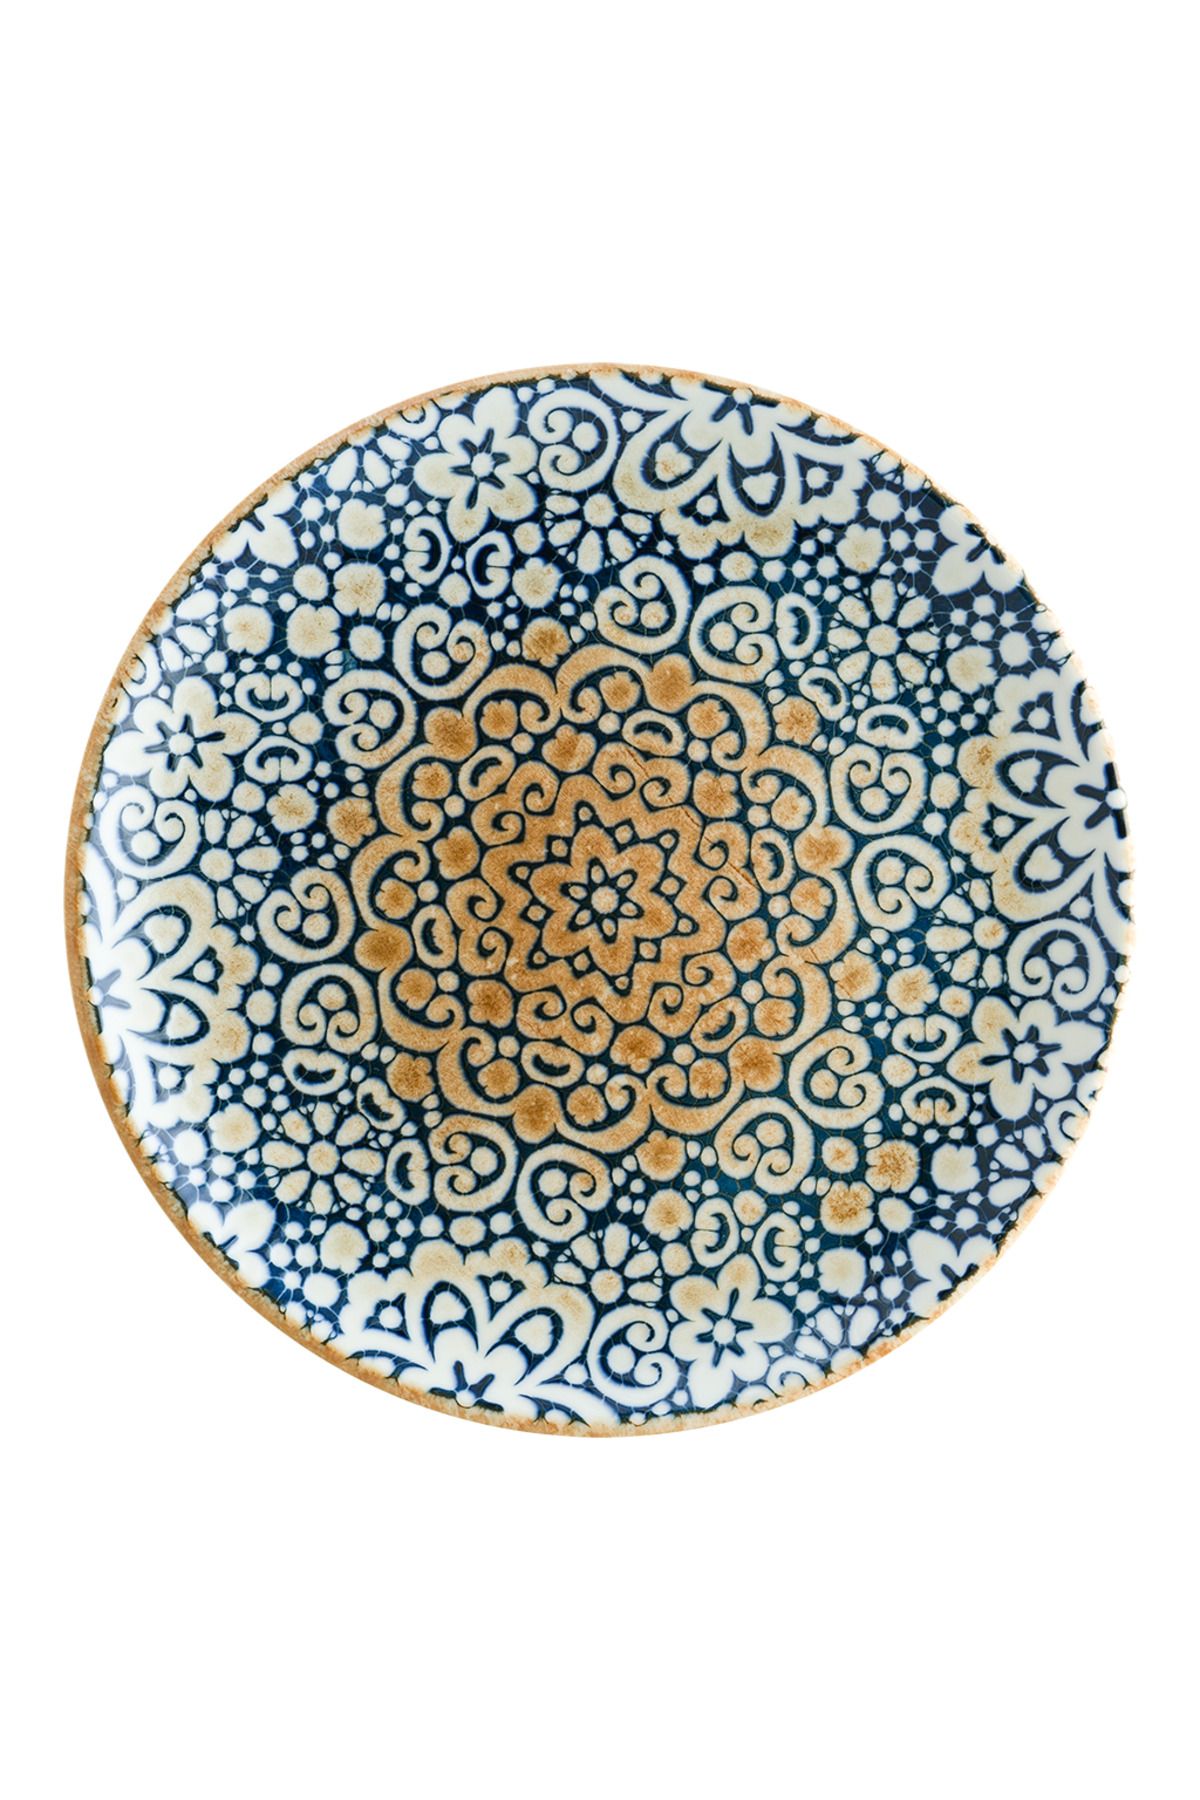 Bonna Porselen Alhambra Serisi 32 CM Pizza Tabağı ALHgrm32pz 6 adet